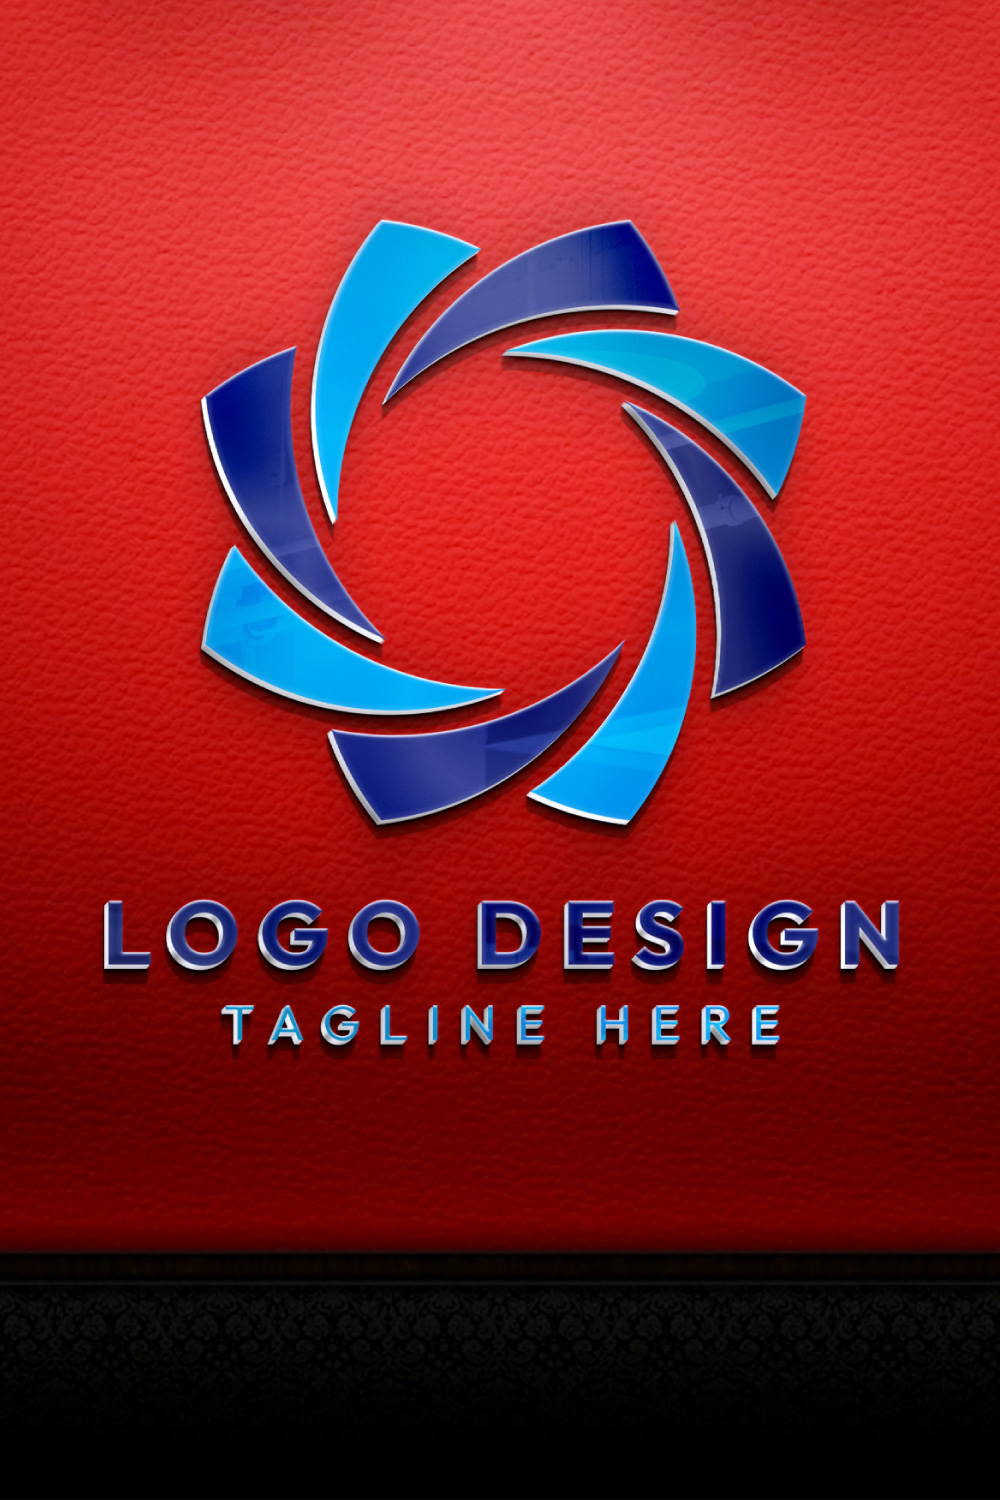 Ultimate Brands General Logo Design Master Bundle: Elevate Your Brand Identity pinterest preview image.